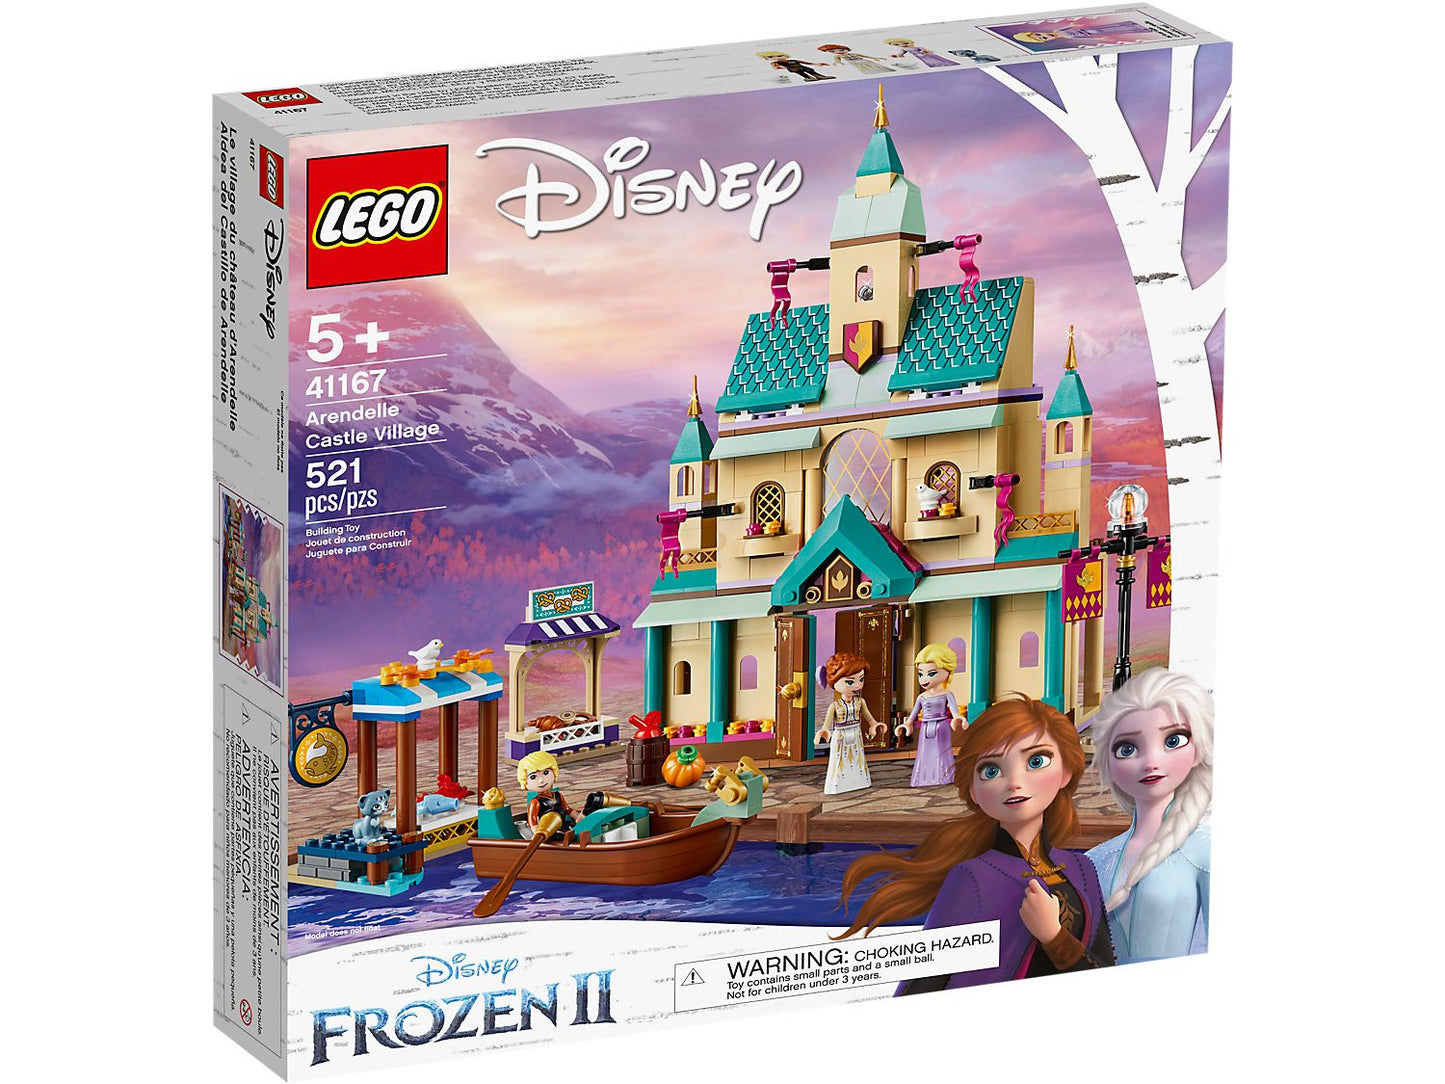 Lego Disney Frozen II Arendelle Castle Village 41167